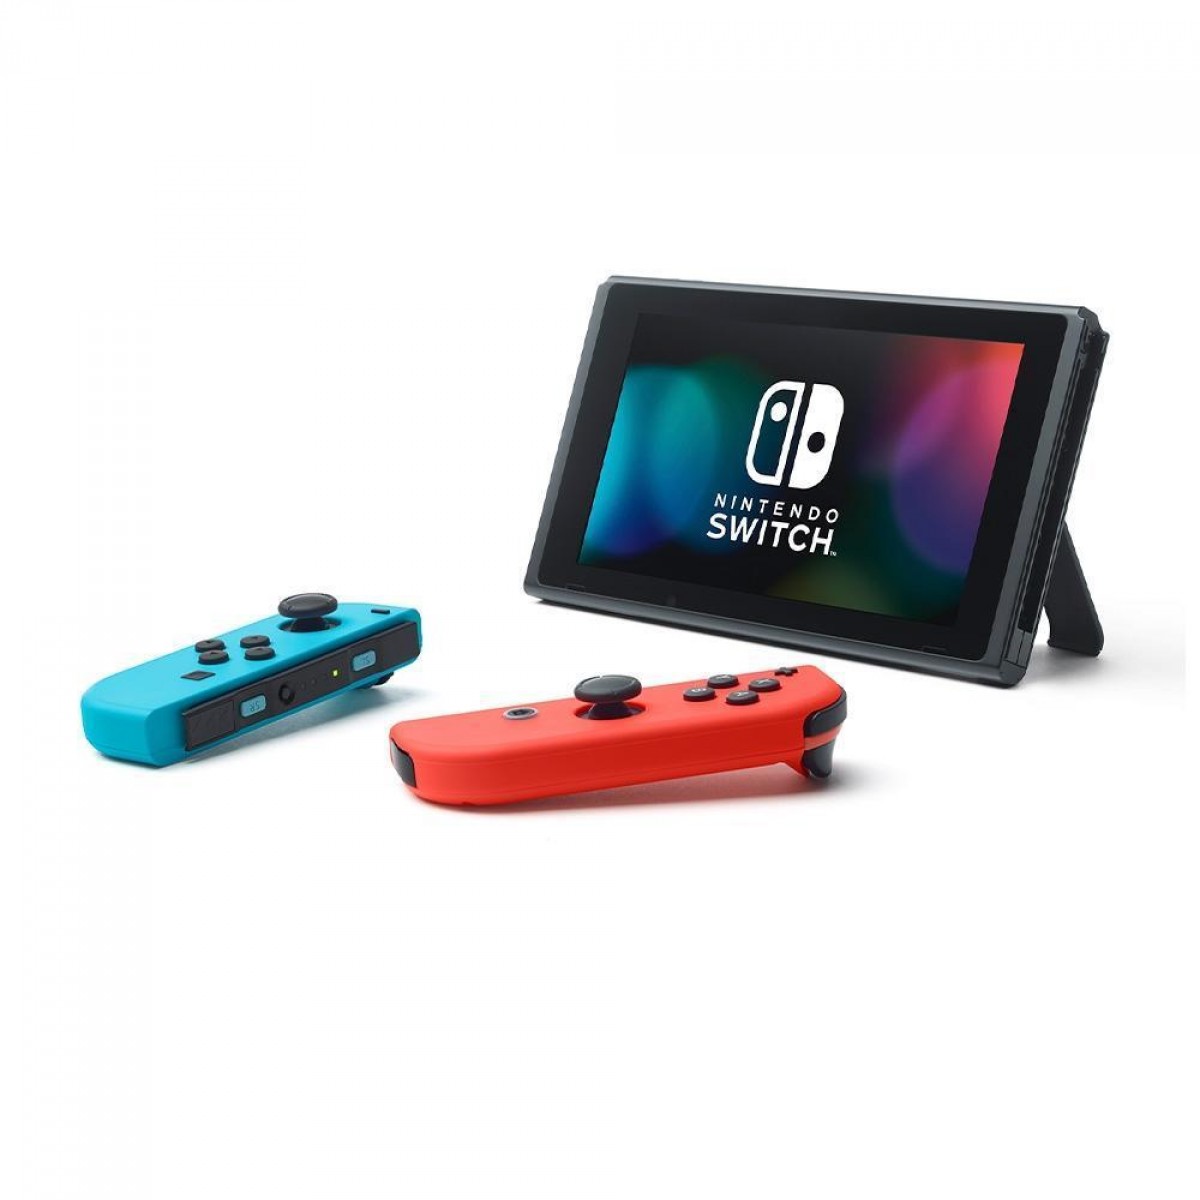 Console Nintendo Switch + Mario Kart 8 Deluxe + 3 Meses Nintendo Switch Online, 32GB, 1x Joycon, Blue/Red, HBDSKABL1